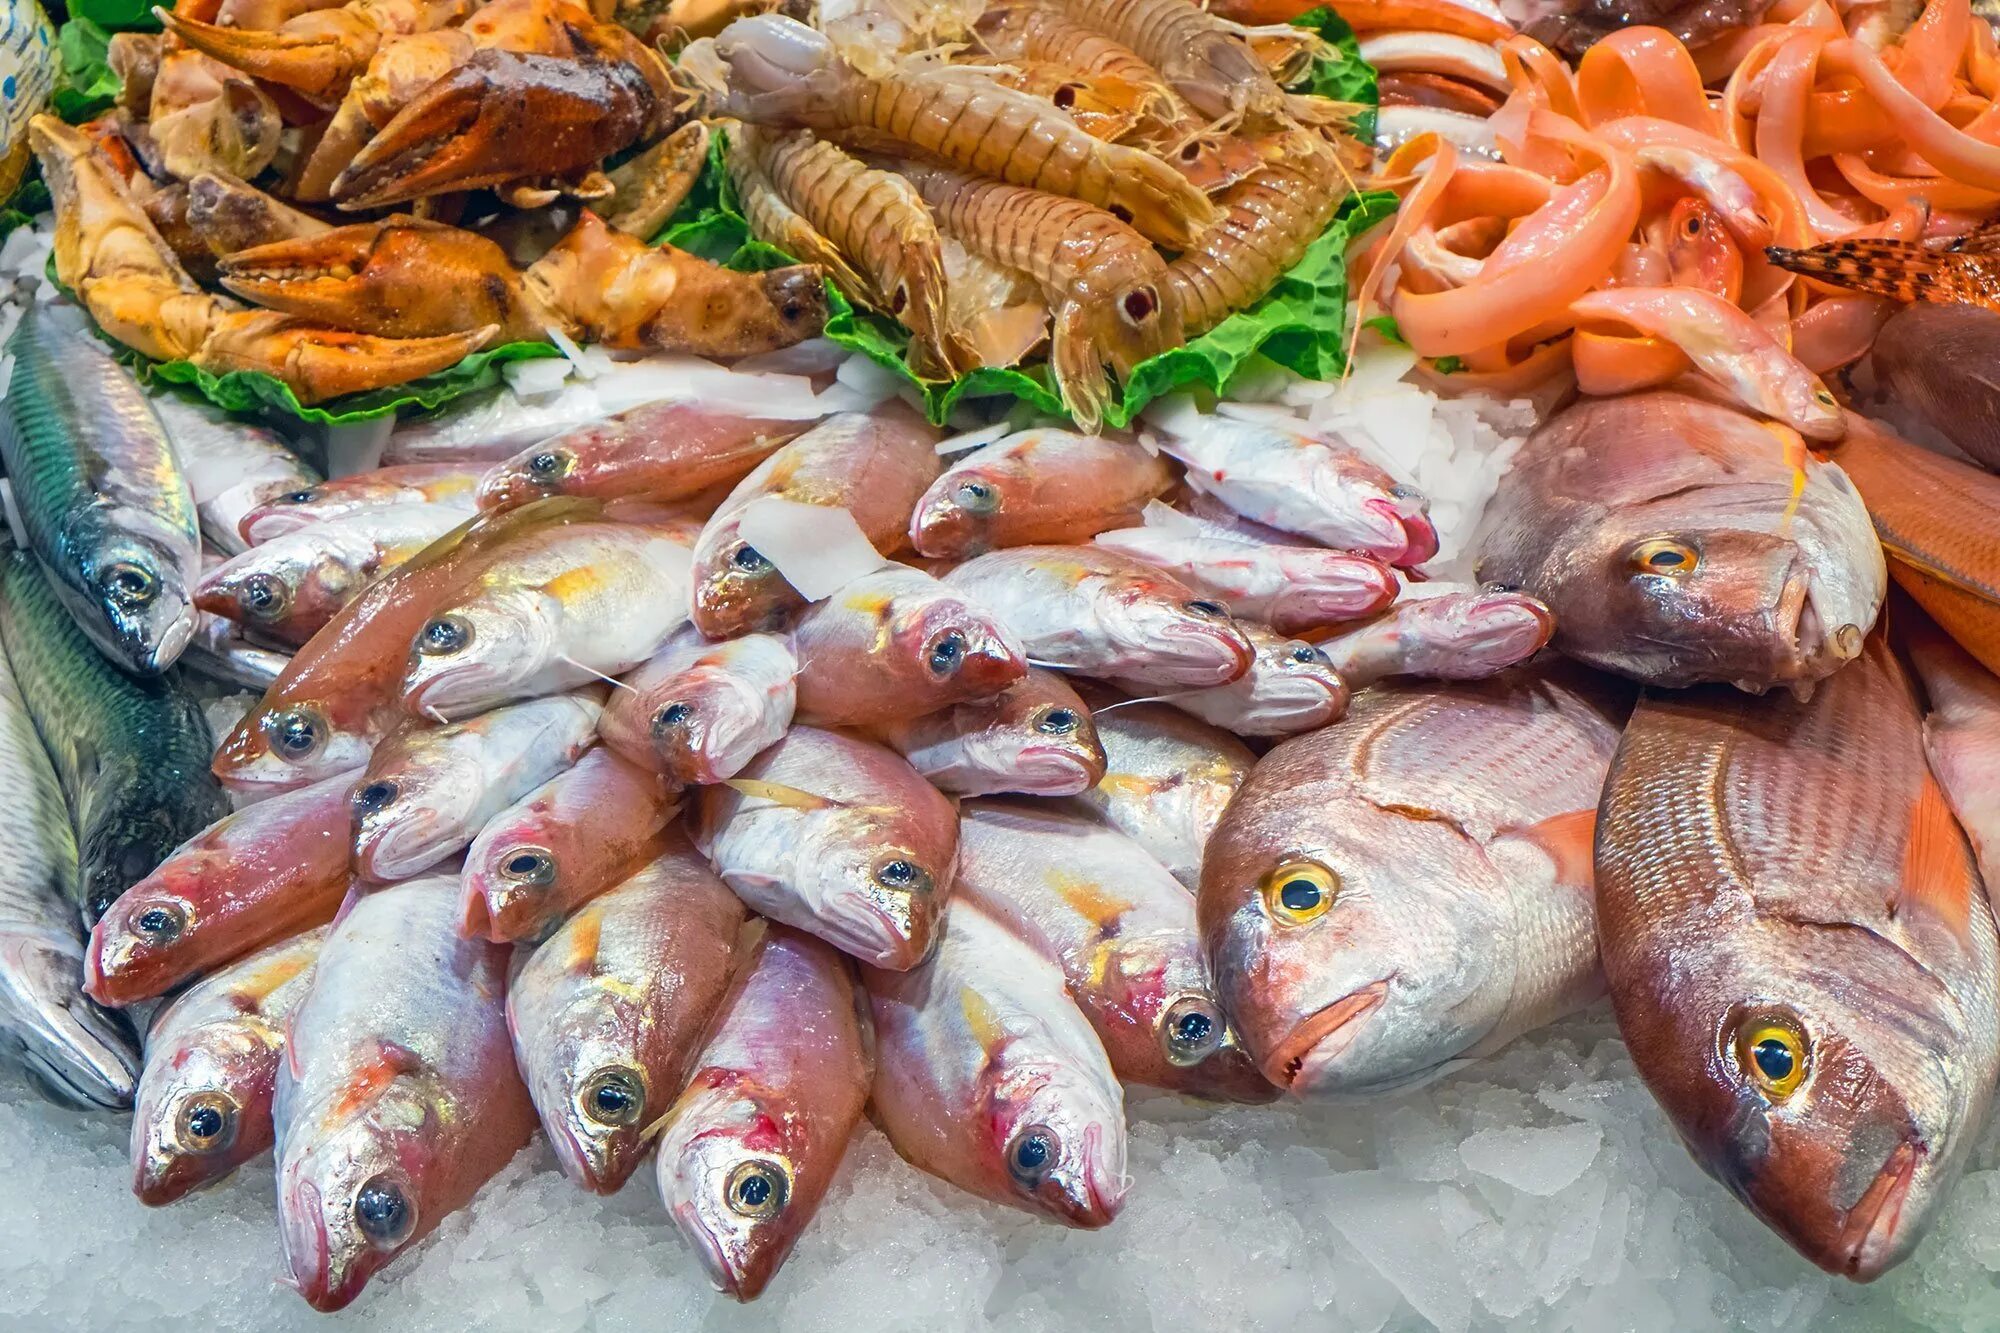 Купить вкусную рыбу. Рыба на рынке. Рыба на прилавке. Морская рыба на рынке. Ассортимент морской рыбы на рынках.